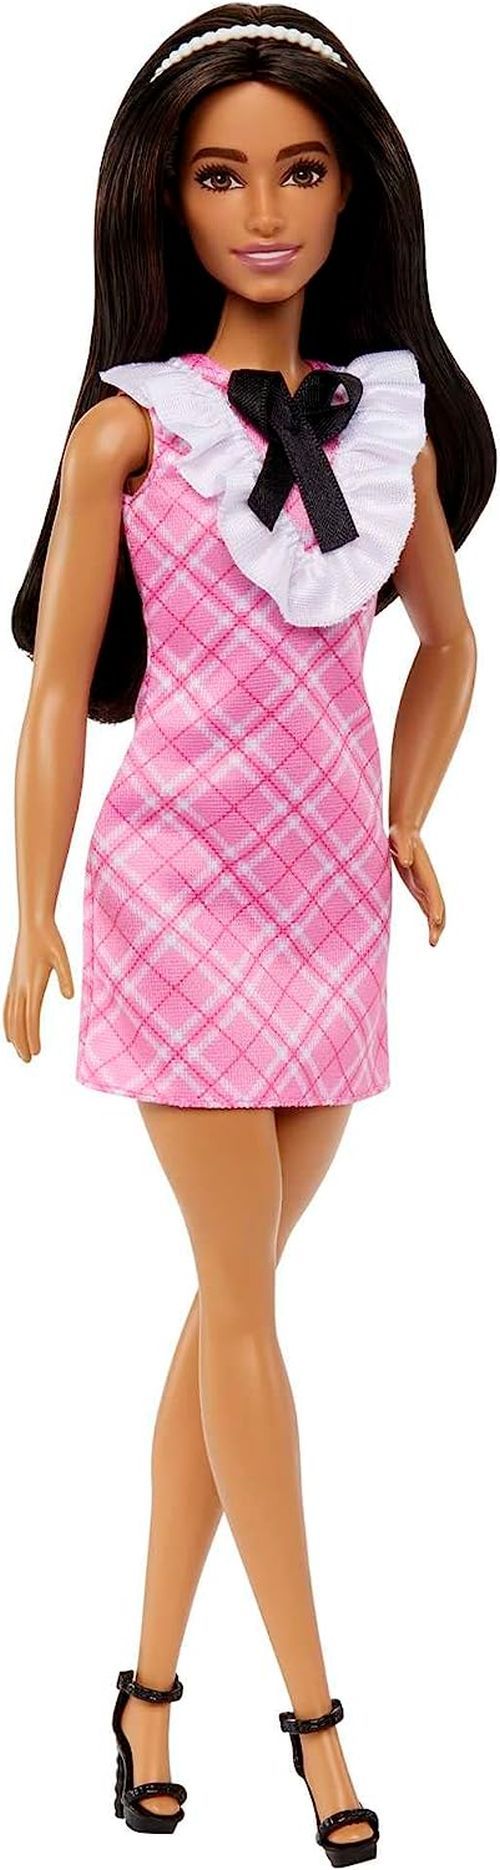 MATTEL Barbie In A Pink Plaid Dress - .